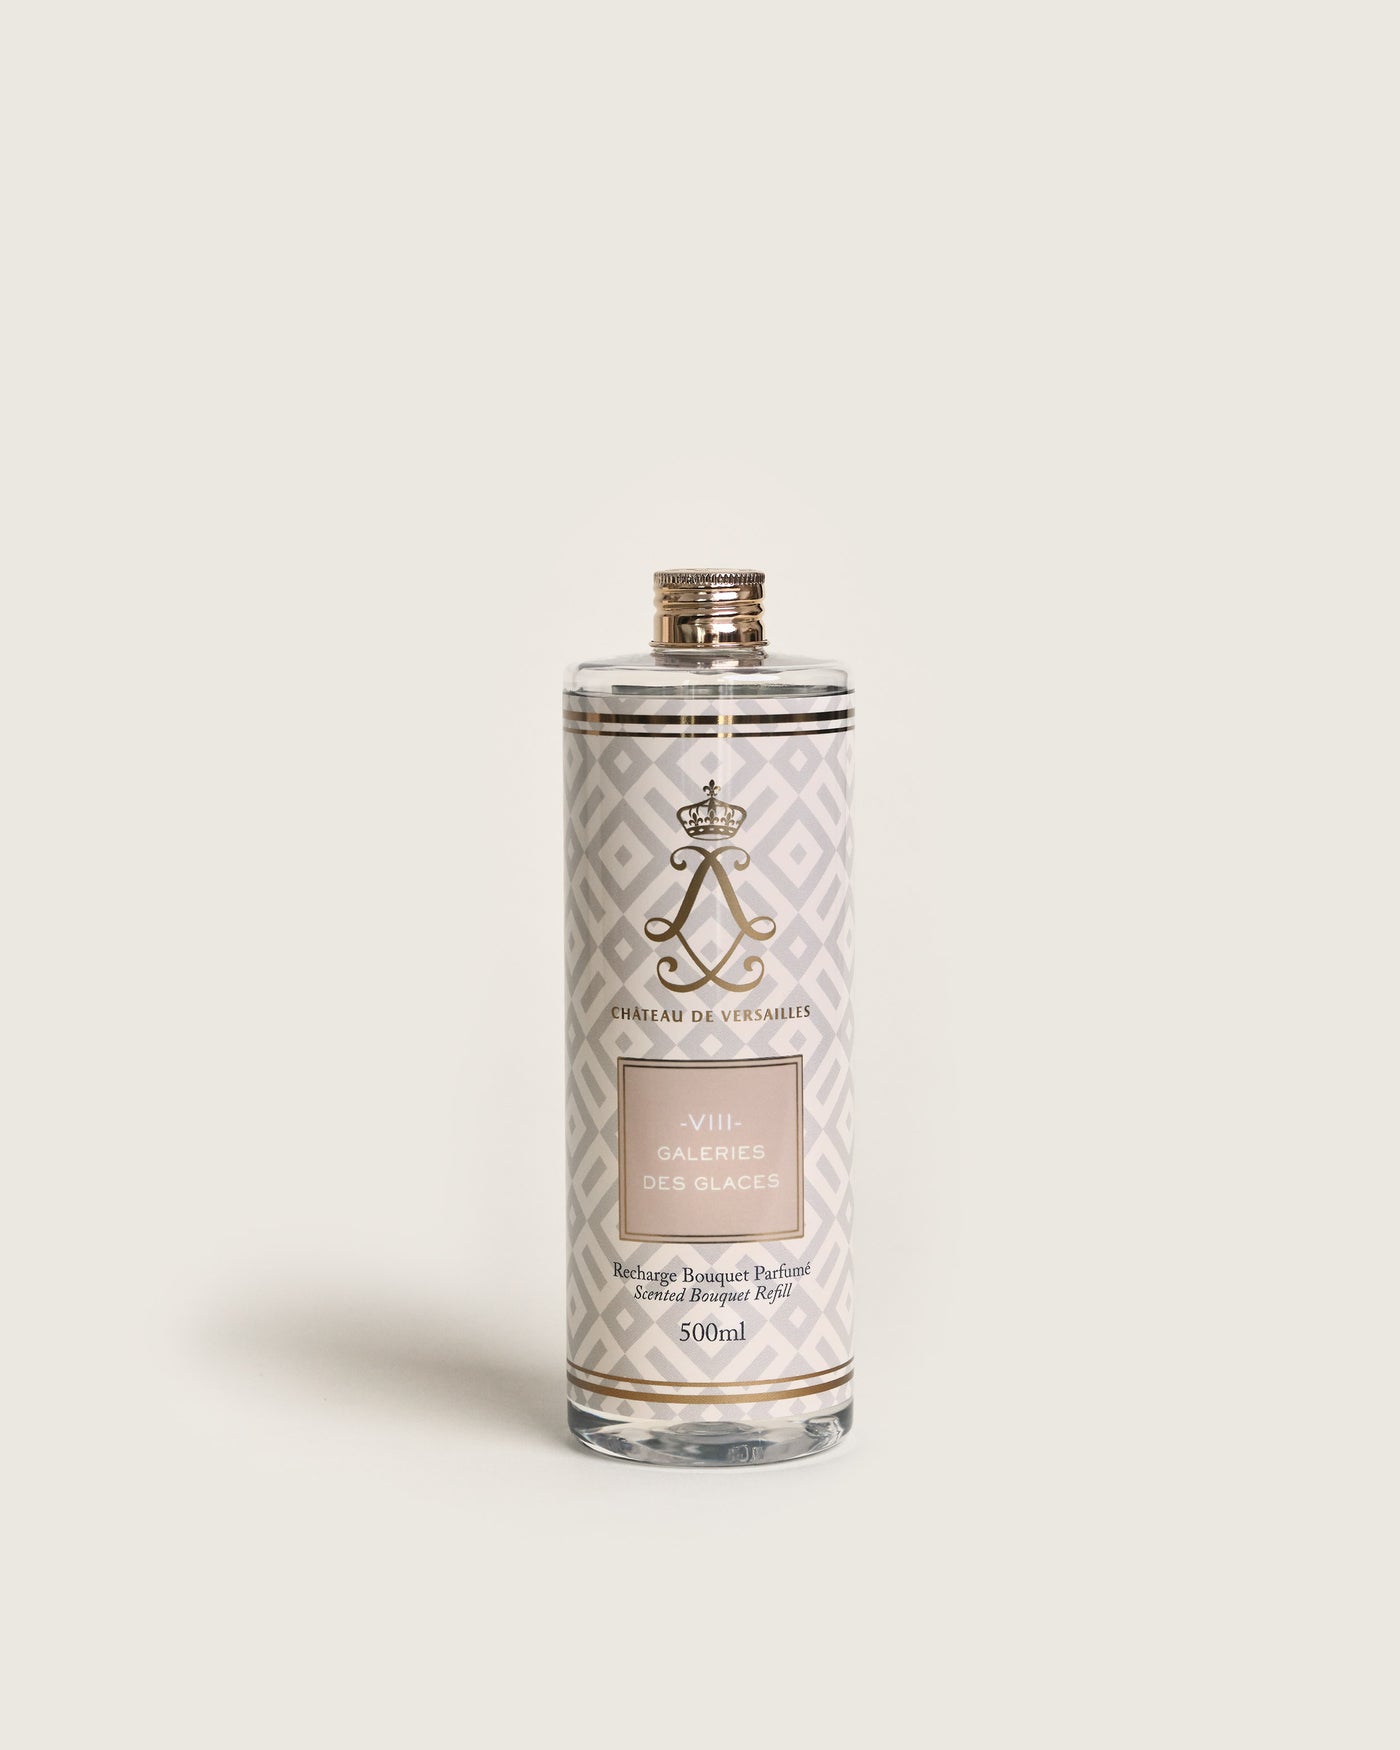 Recarga bouquet perfumado Château de Versailles® 500ml Galerie des Glaces